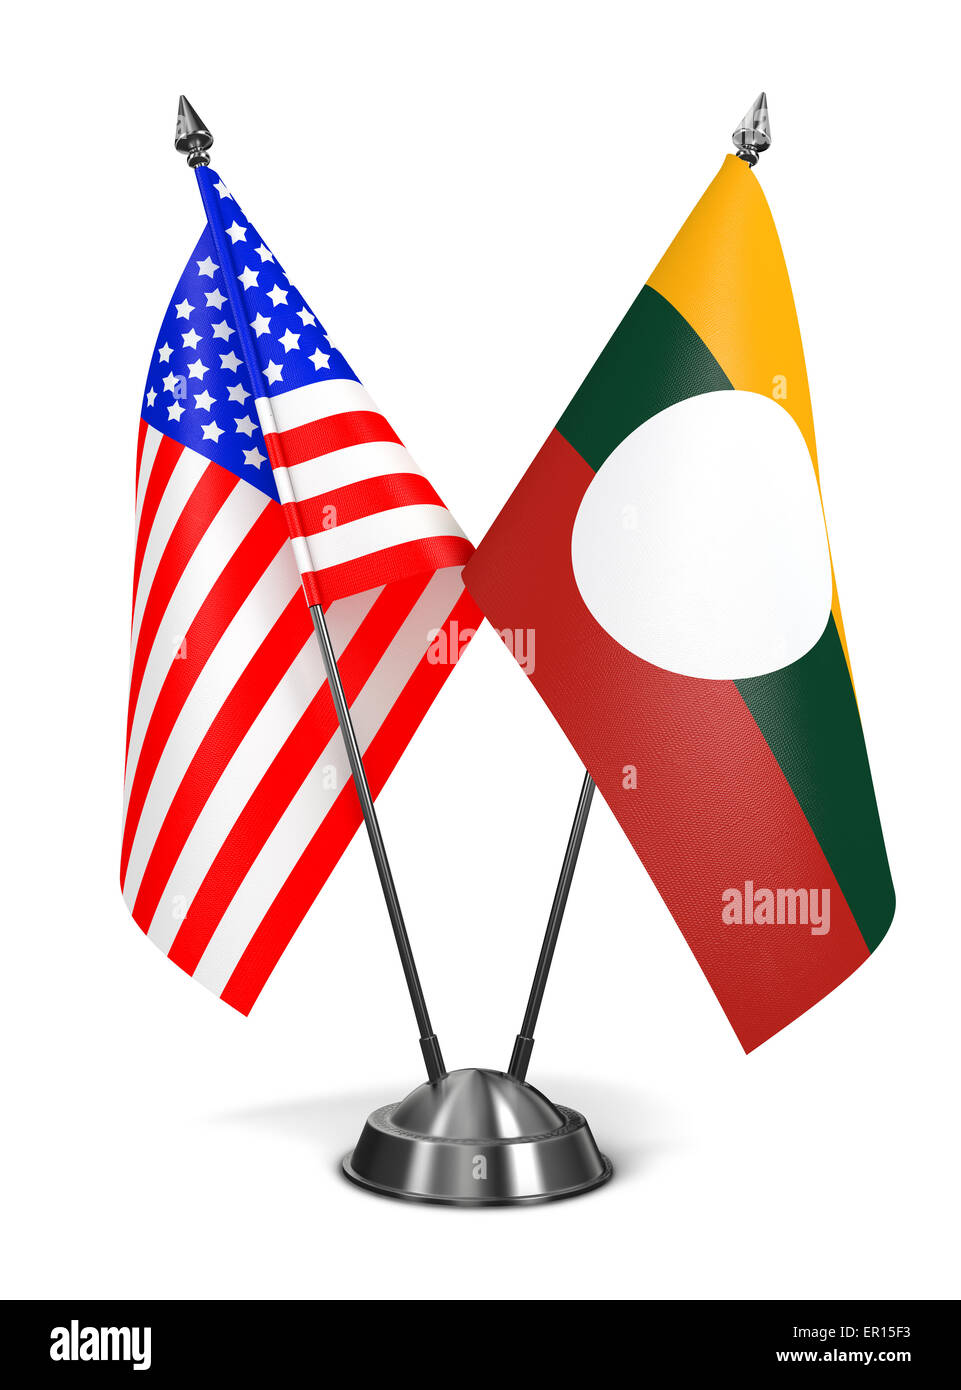 USA und Shan-Staat - Miniatur-Flags. Stockfoto